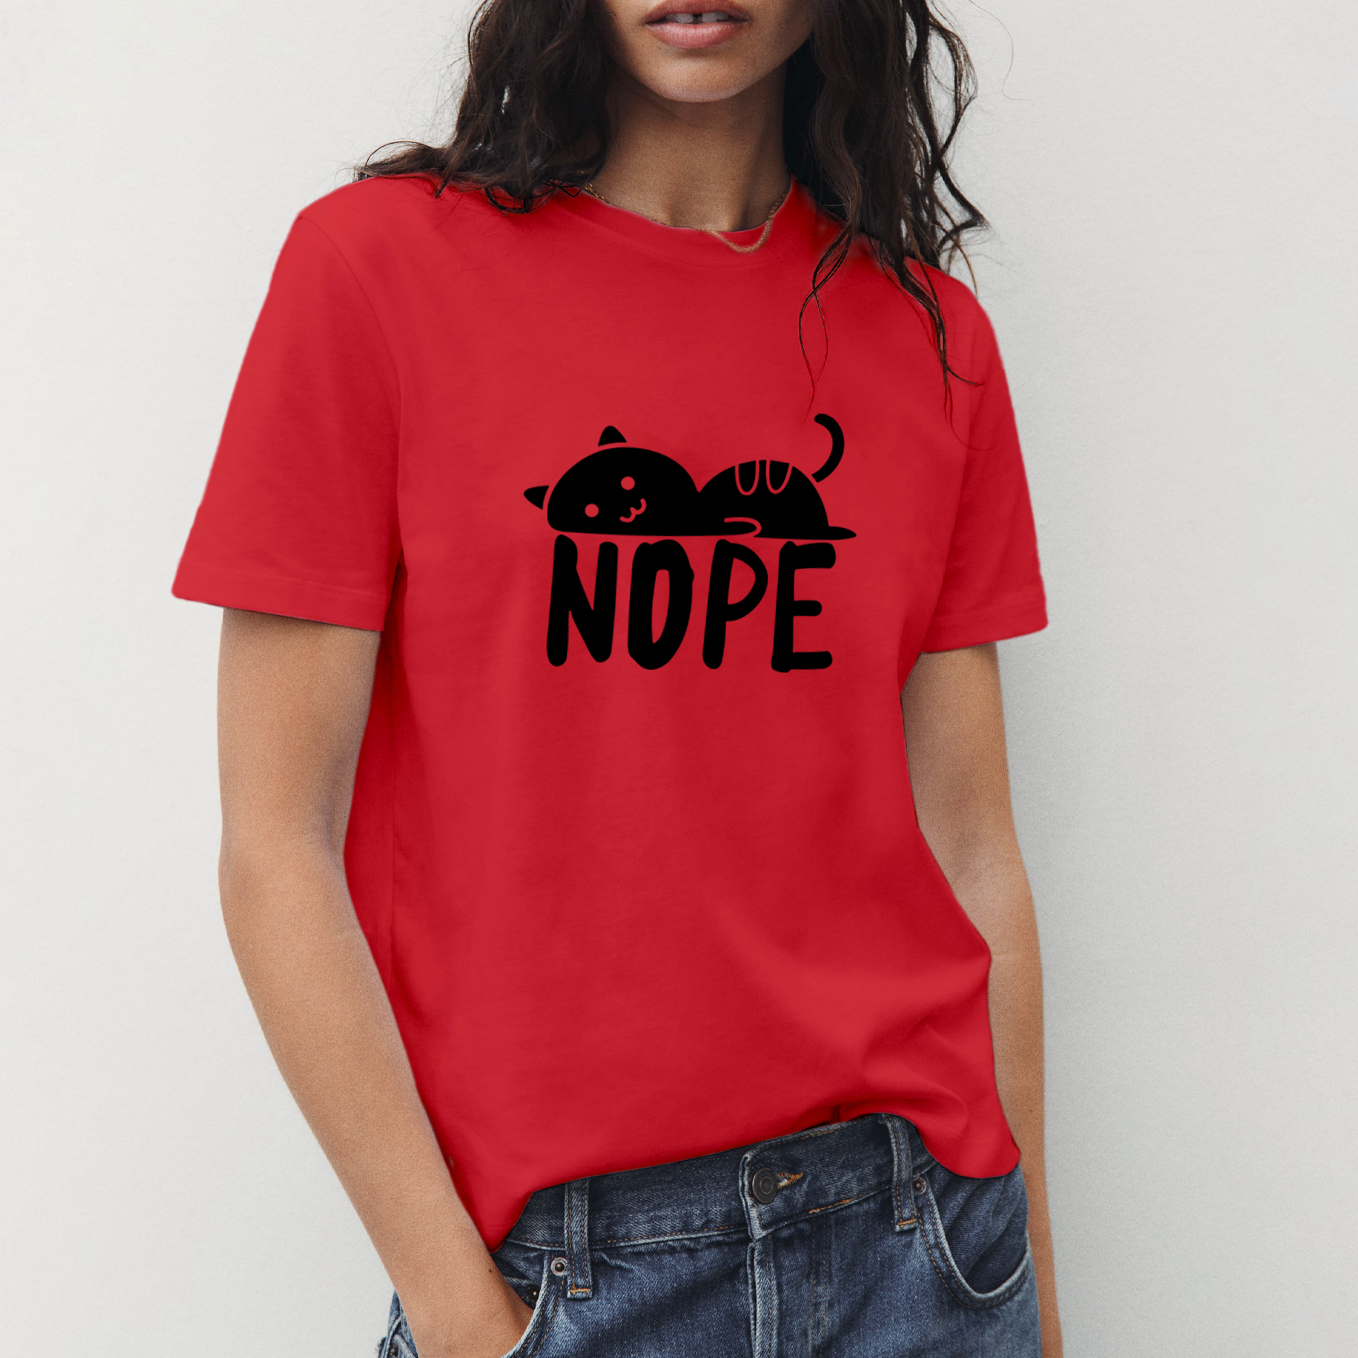 T-shirt "Nope"